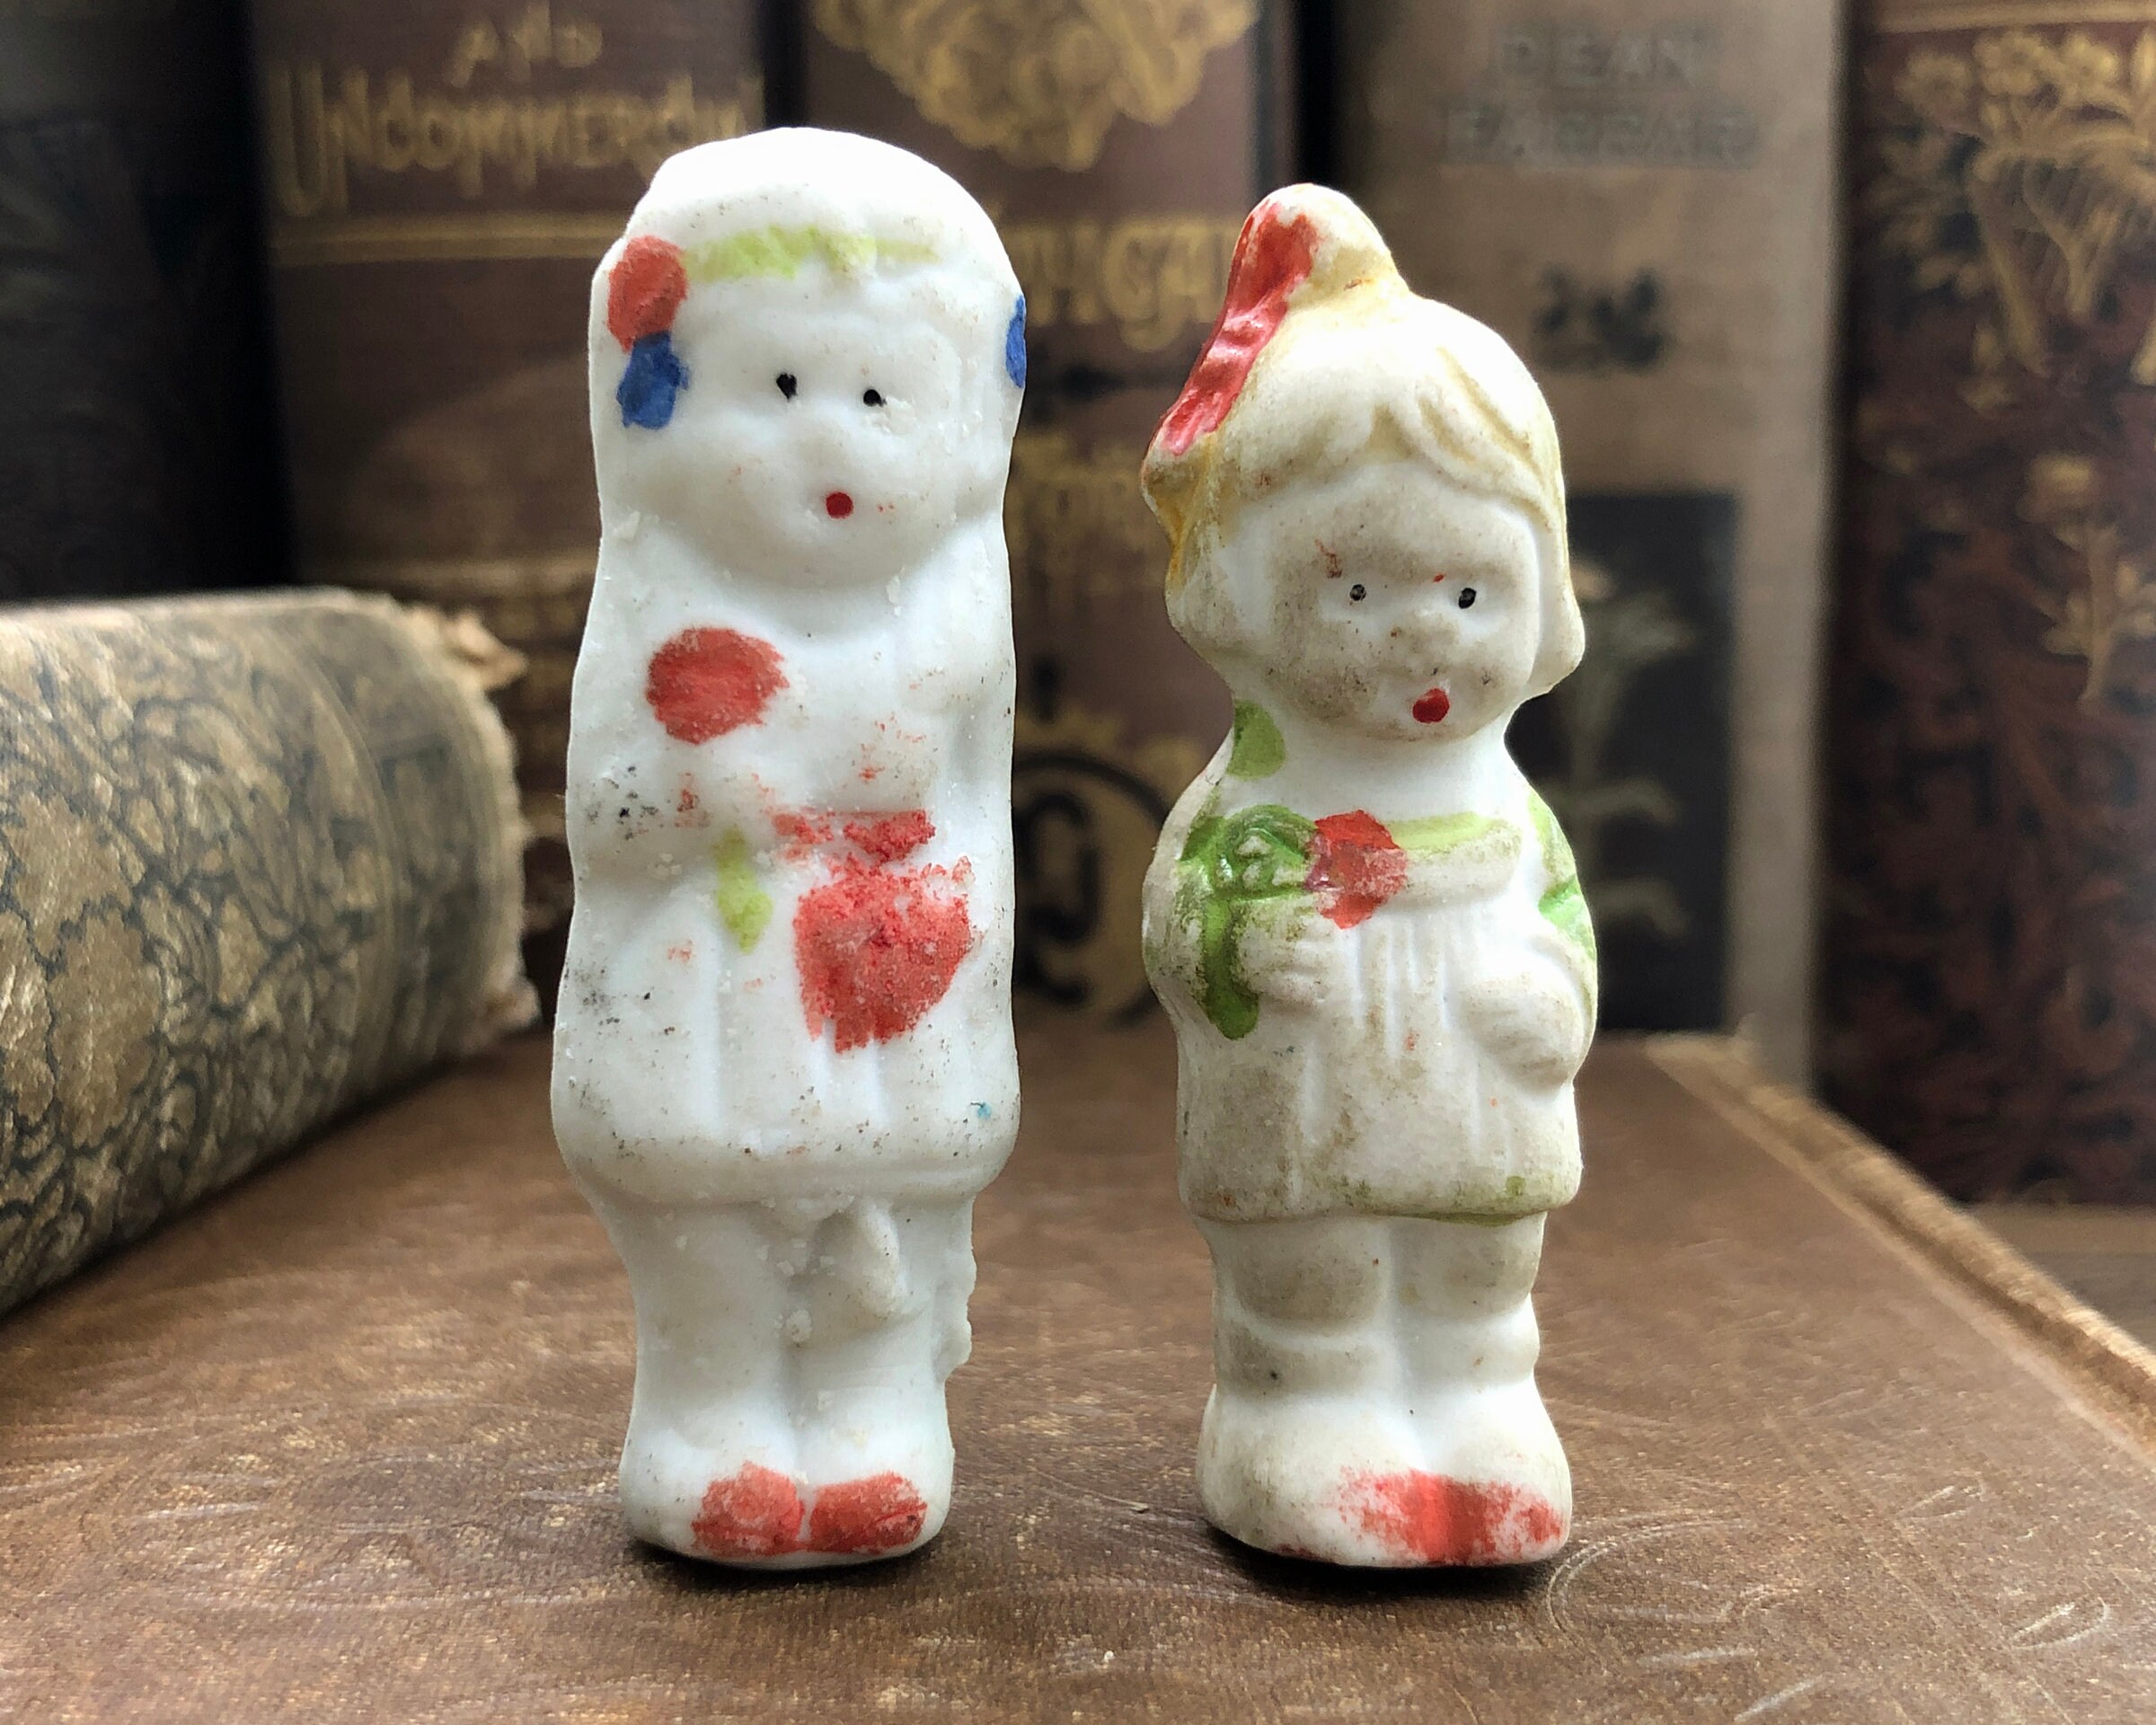 Doll Antique Tiny Bisque Girl Porcelain Bisque Figurine